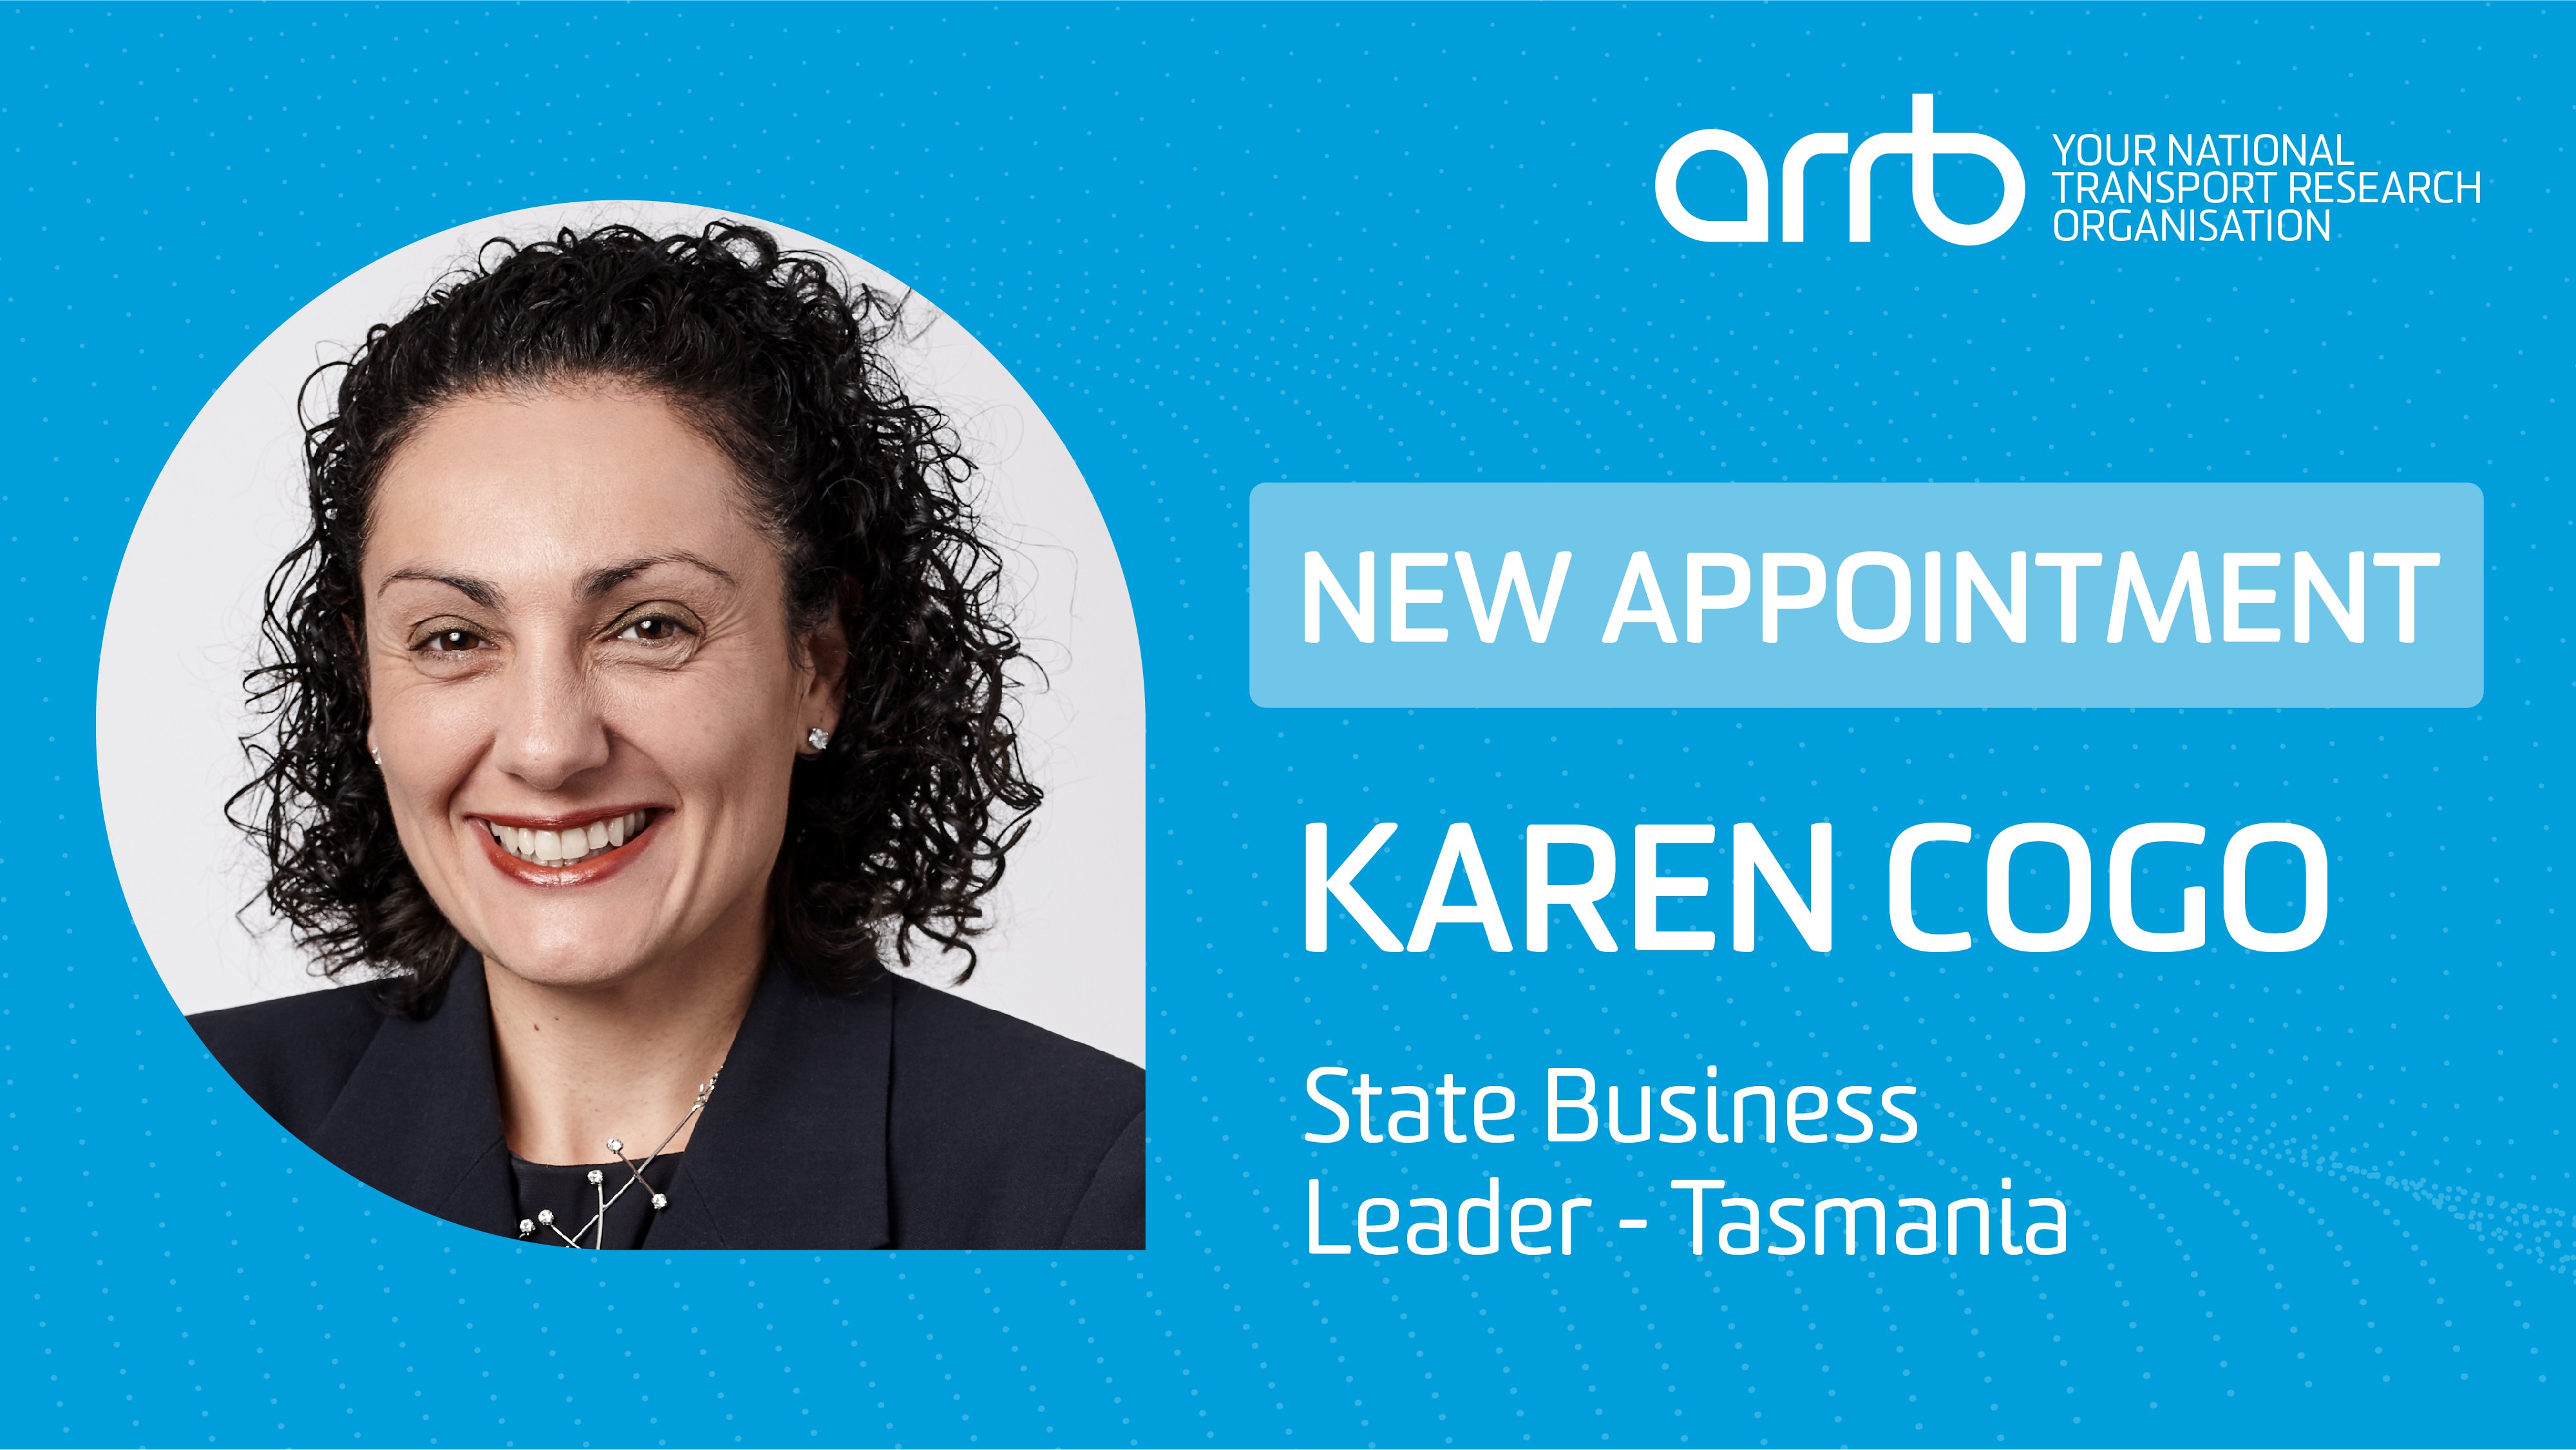 Karen Cogo appointment